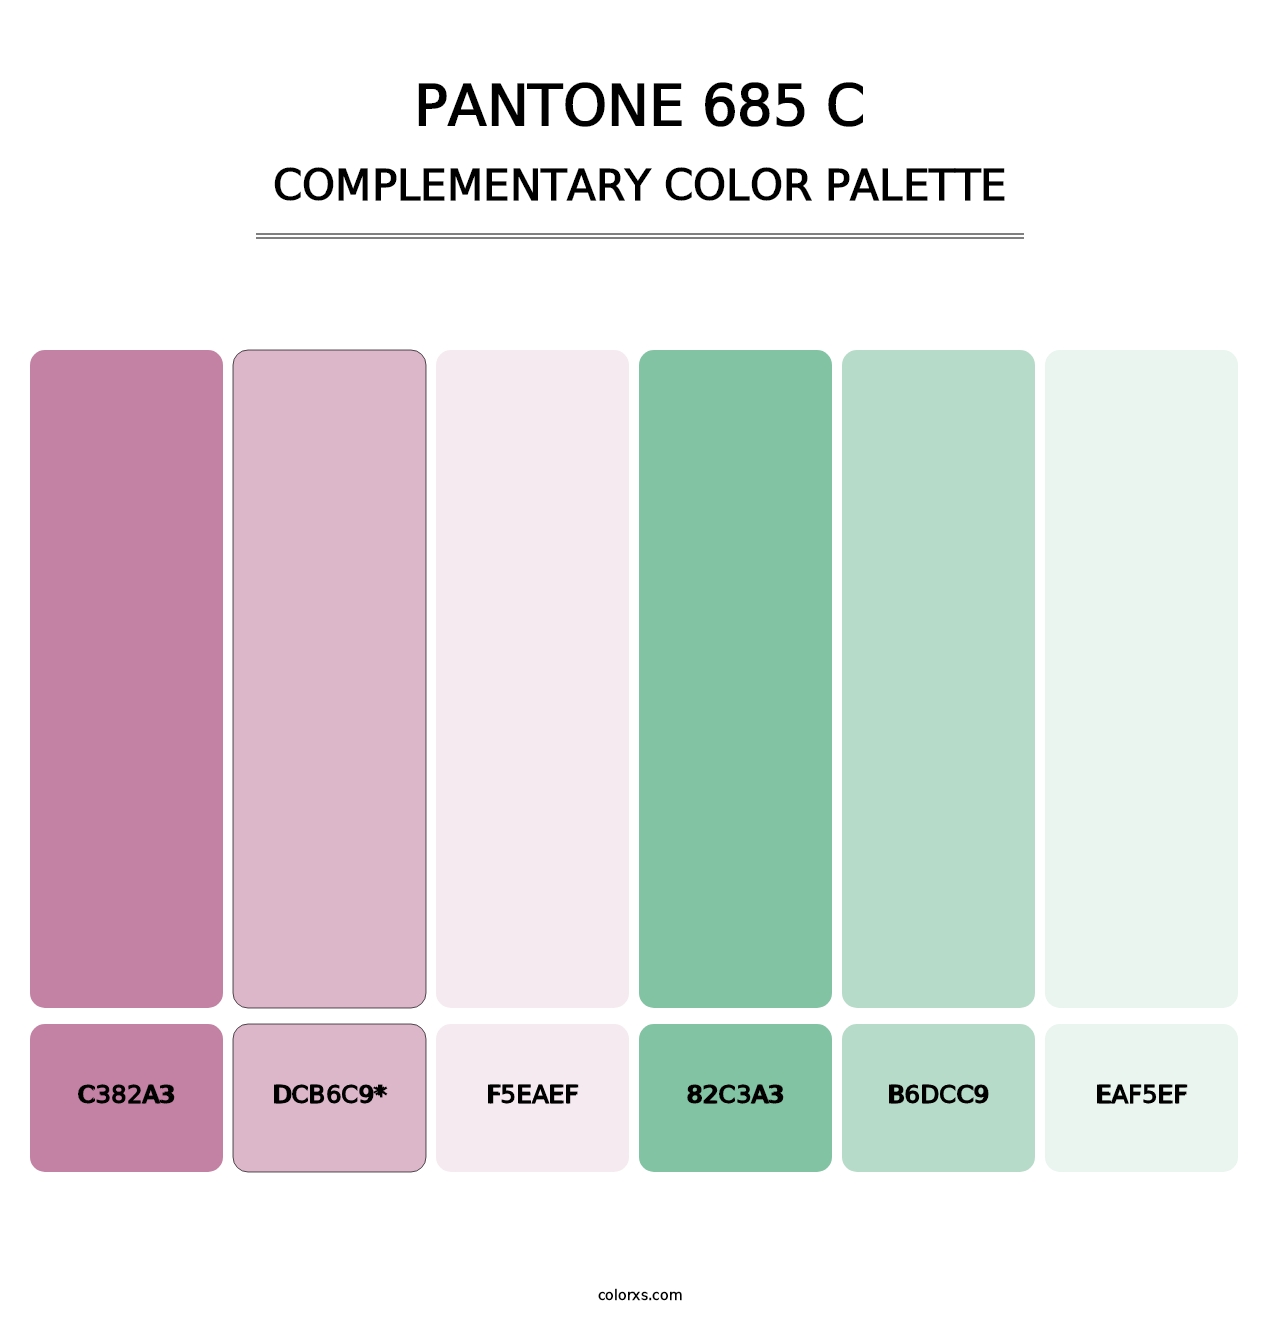 PANTONE 685 C - Complementary Color Palette